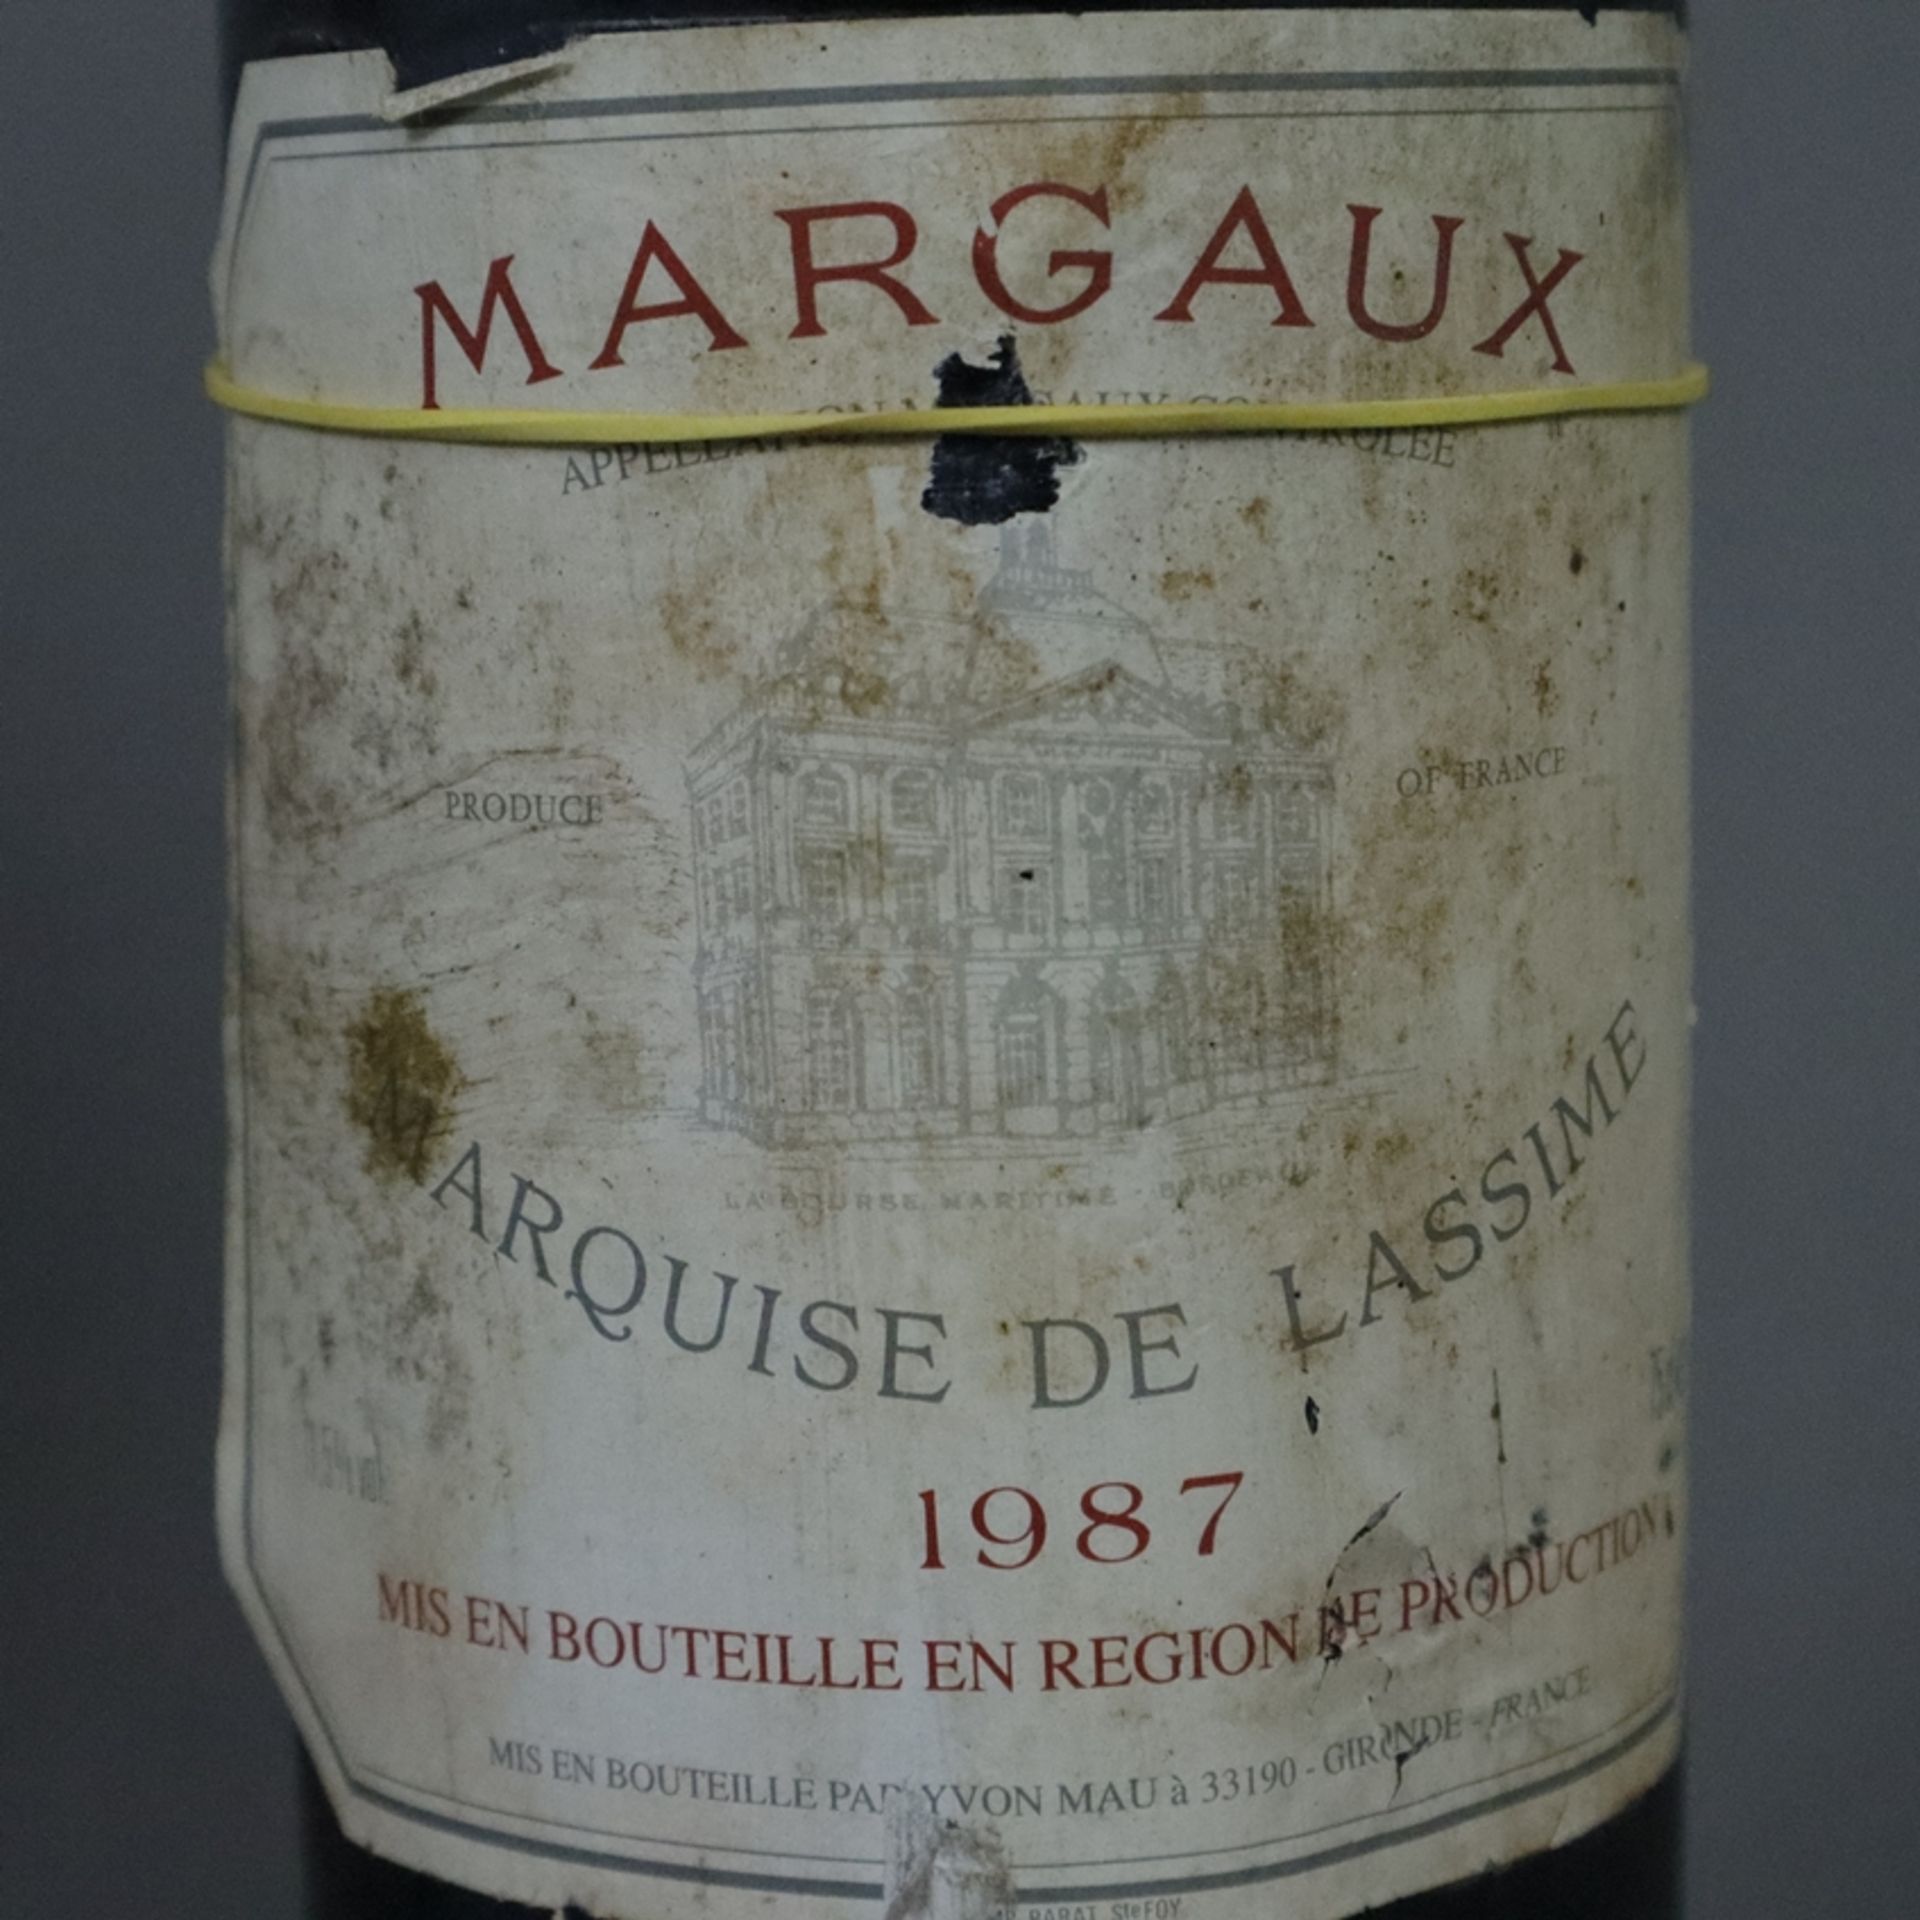 Weinkonvolut - 3 Flaschen 1987 Margaux, Marquise de Lassime, France, 75 cl, Füllstand: Top Shoulder - Image 4 of 8